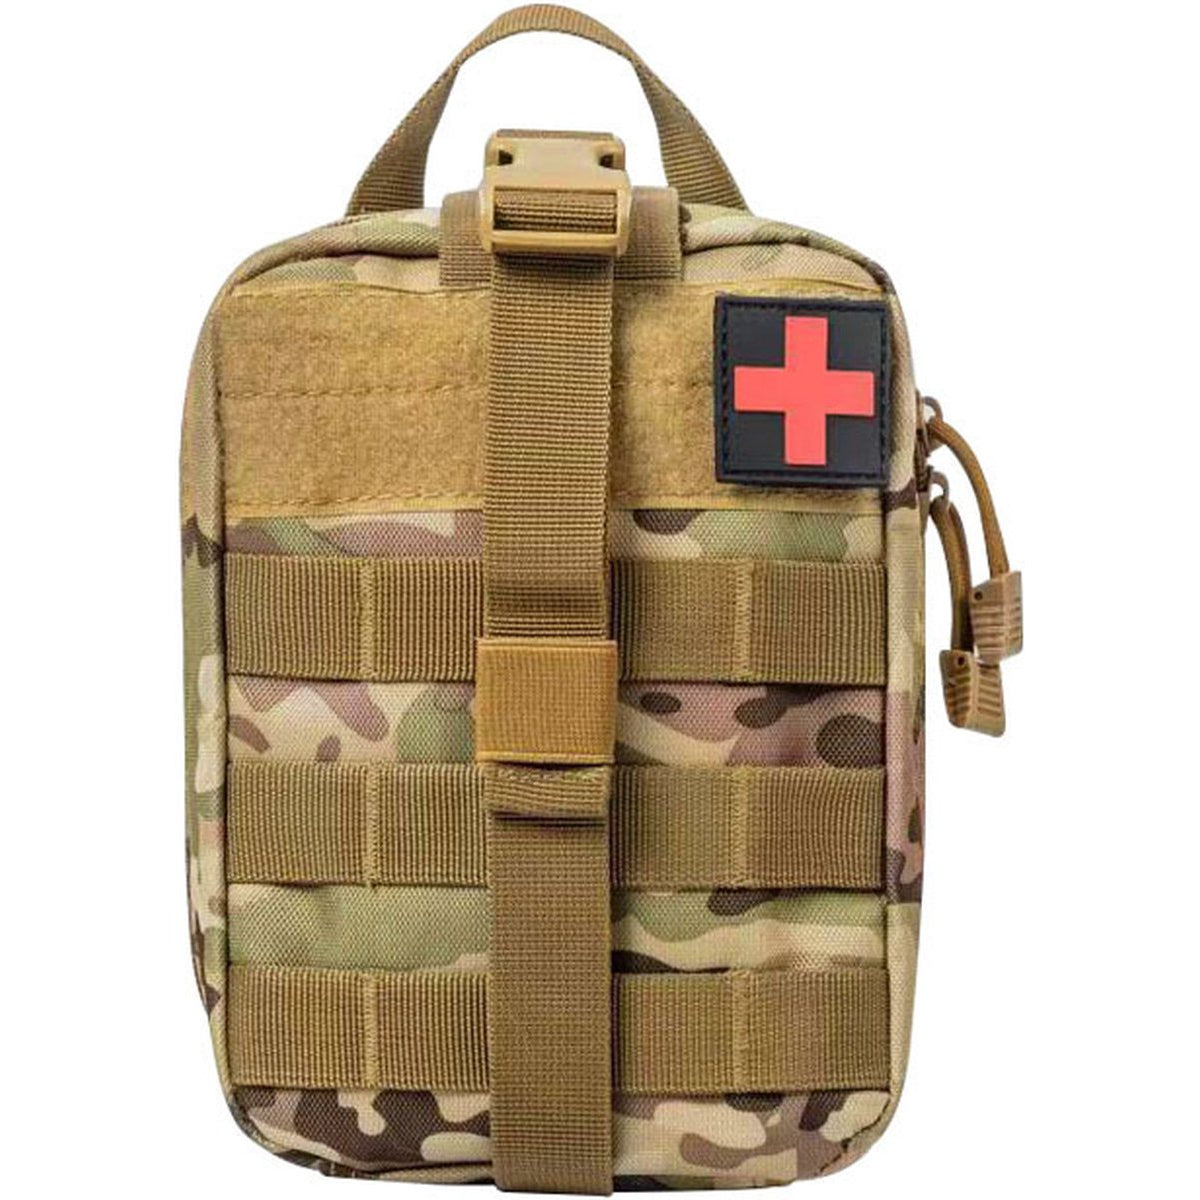 Militaire EHBO kit - Chinees leger - Medisch - Professioneel - First aid - Kamperen - Survival - Reizen - Camping - Eerste hulp